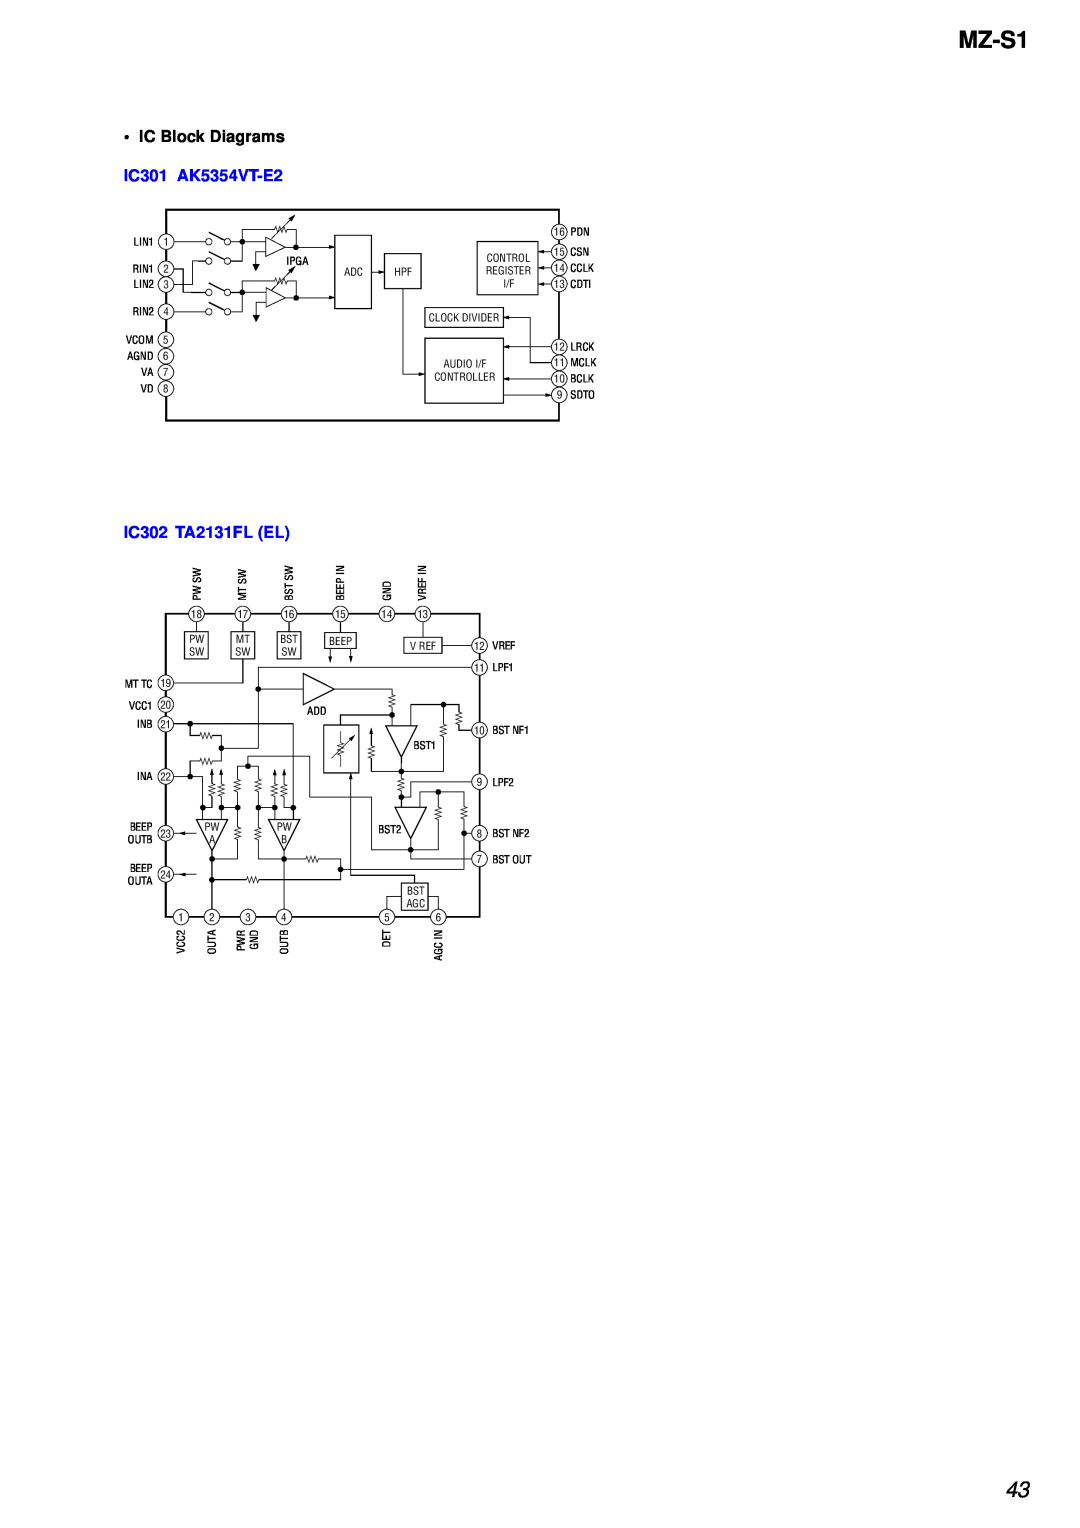 Sony MZ-S1 service manual IC Block Diagrams IC301 AK5354VT-E2, IC302 TA2131FL EL 